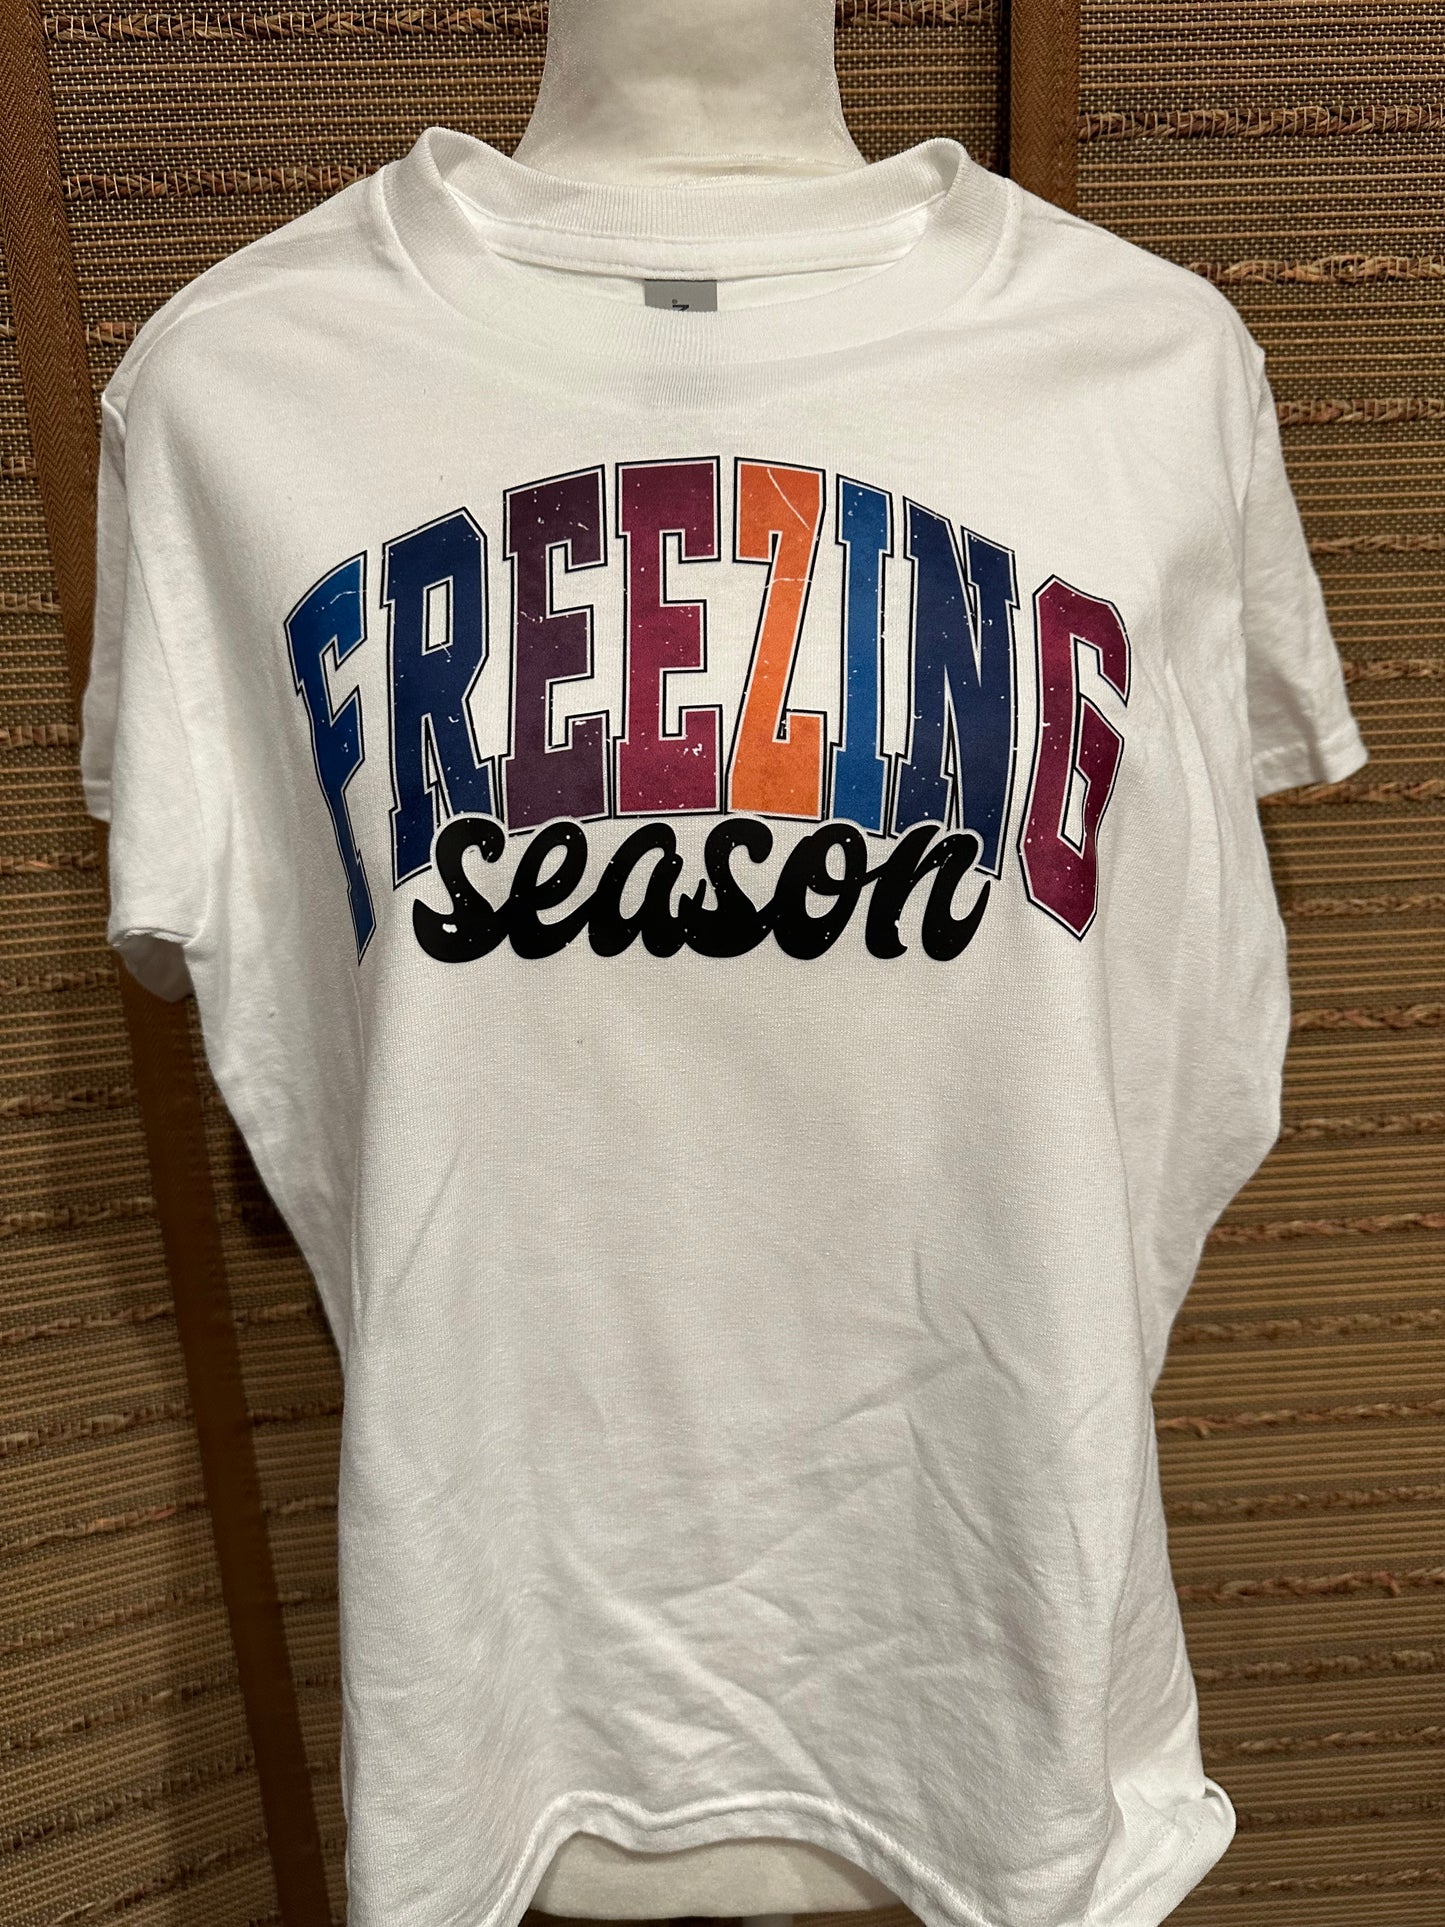 Freezing Season Kid Shirts